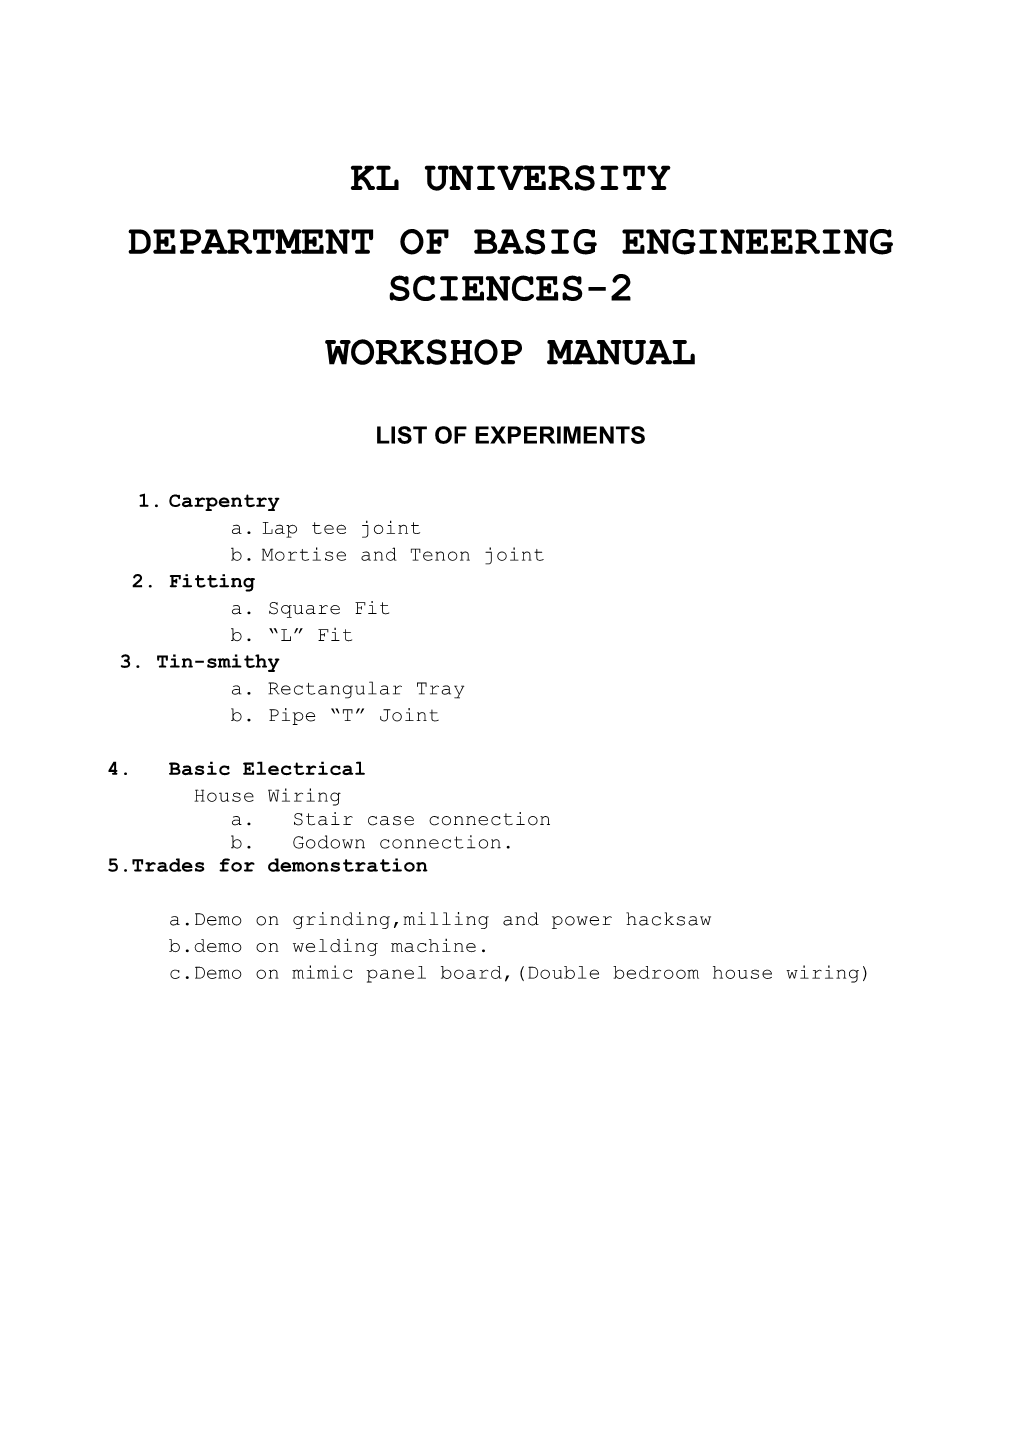 Kl University Department of Basig Engineering Sciences-2 Workshop Manual